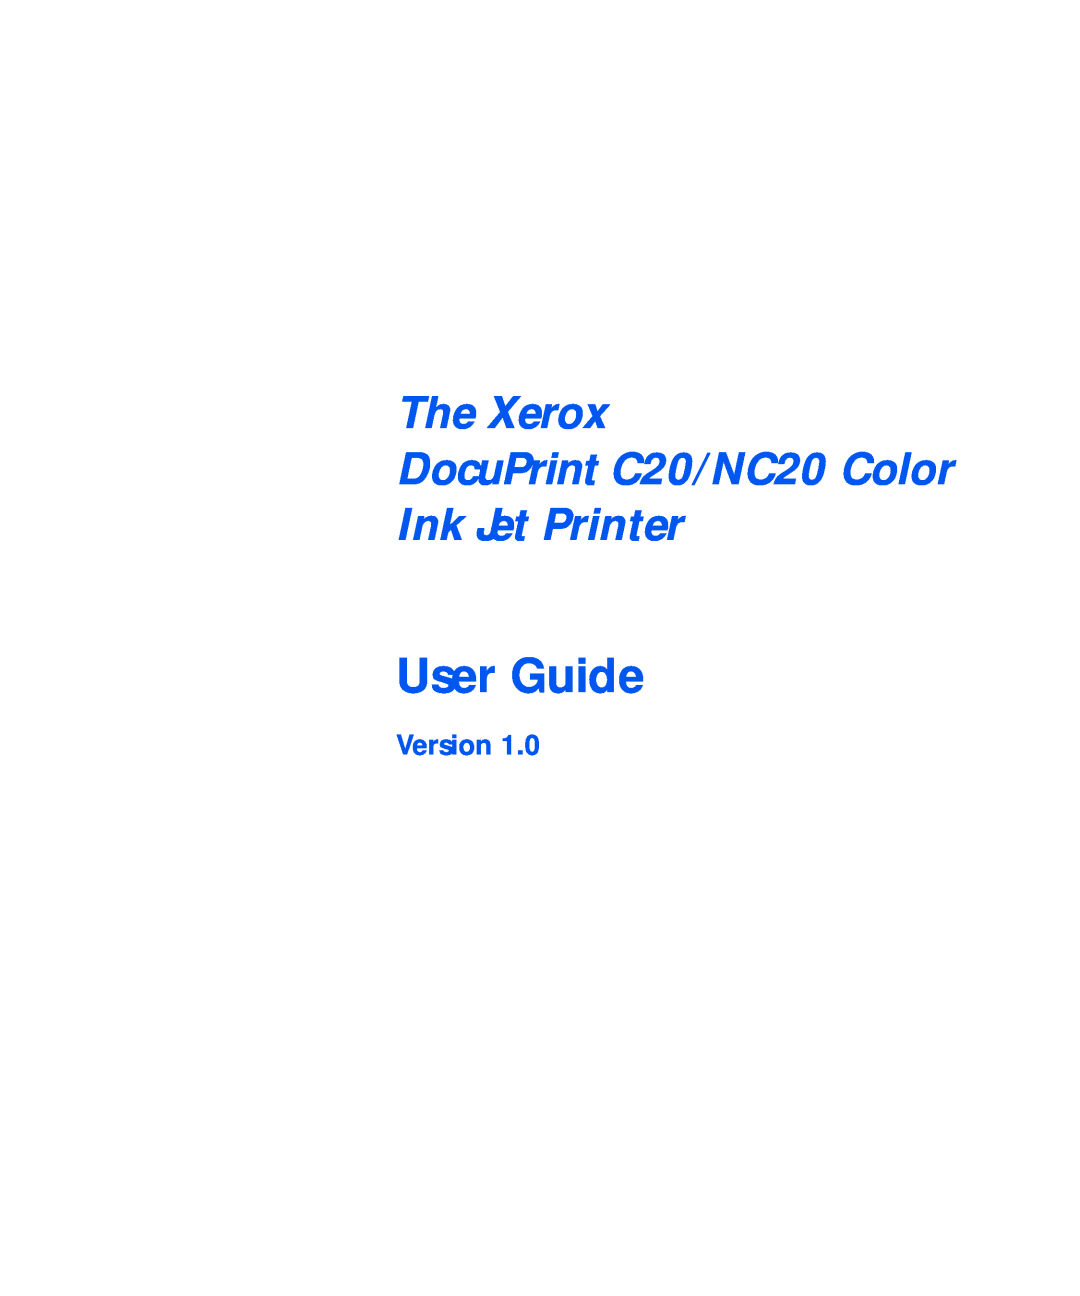 Xerox manual The Xerox DocuPrint C20/NC20 Color Ink Jet Printer, Version, User Guide 